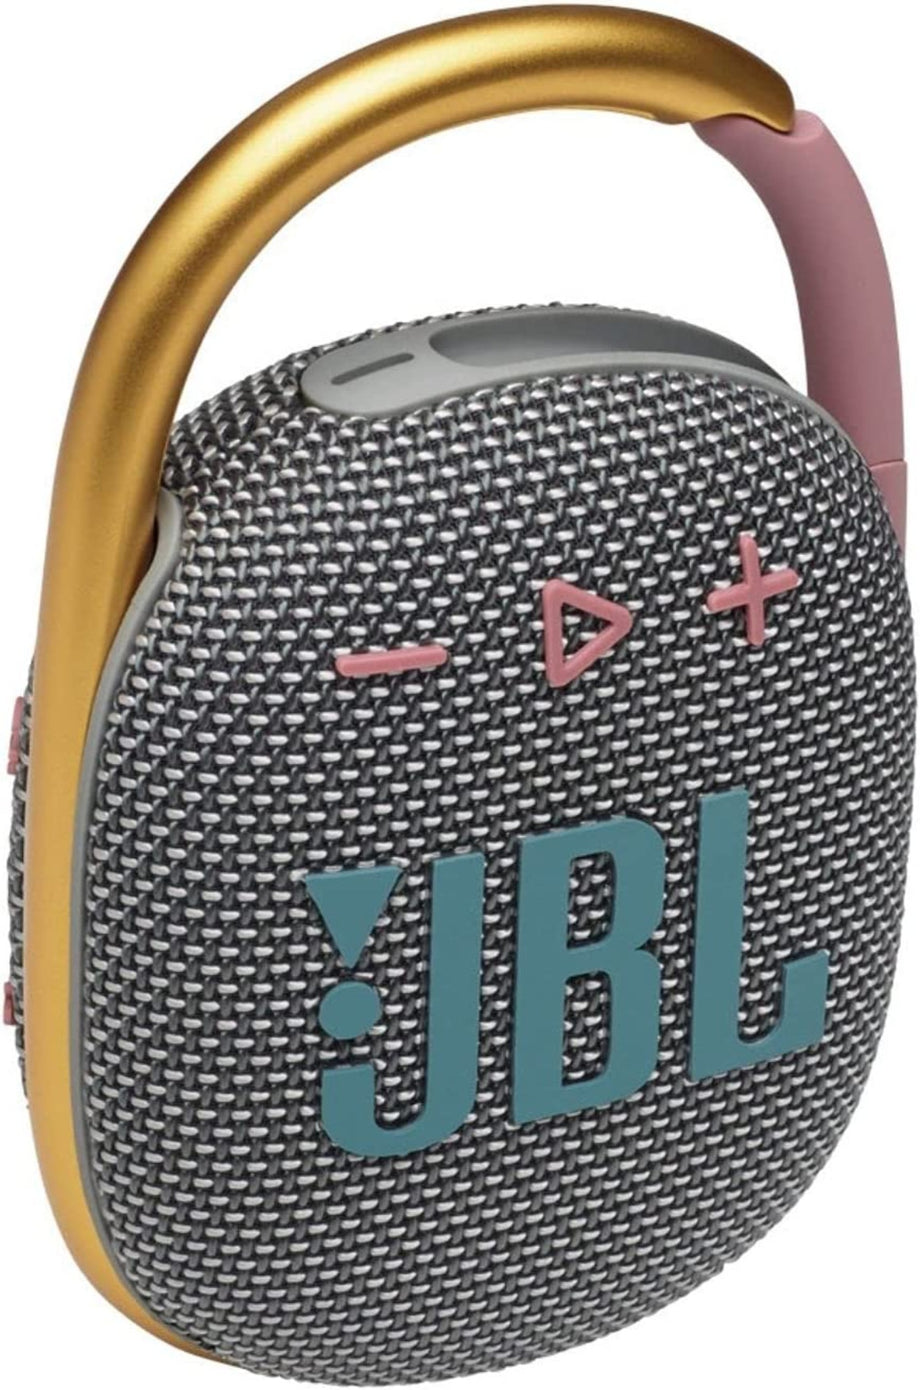 Altavoz inalámbrico  JBL Go Essential, 3.1 W, Bluetooth 4.2